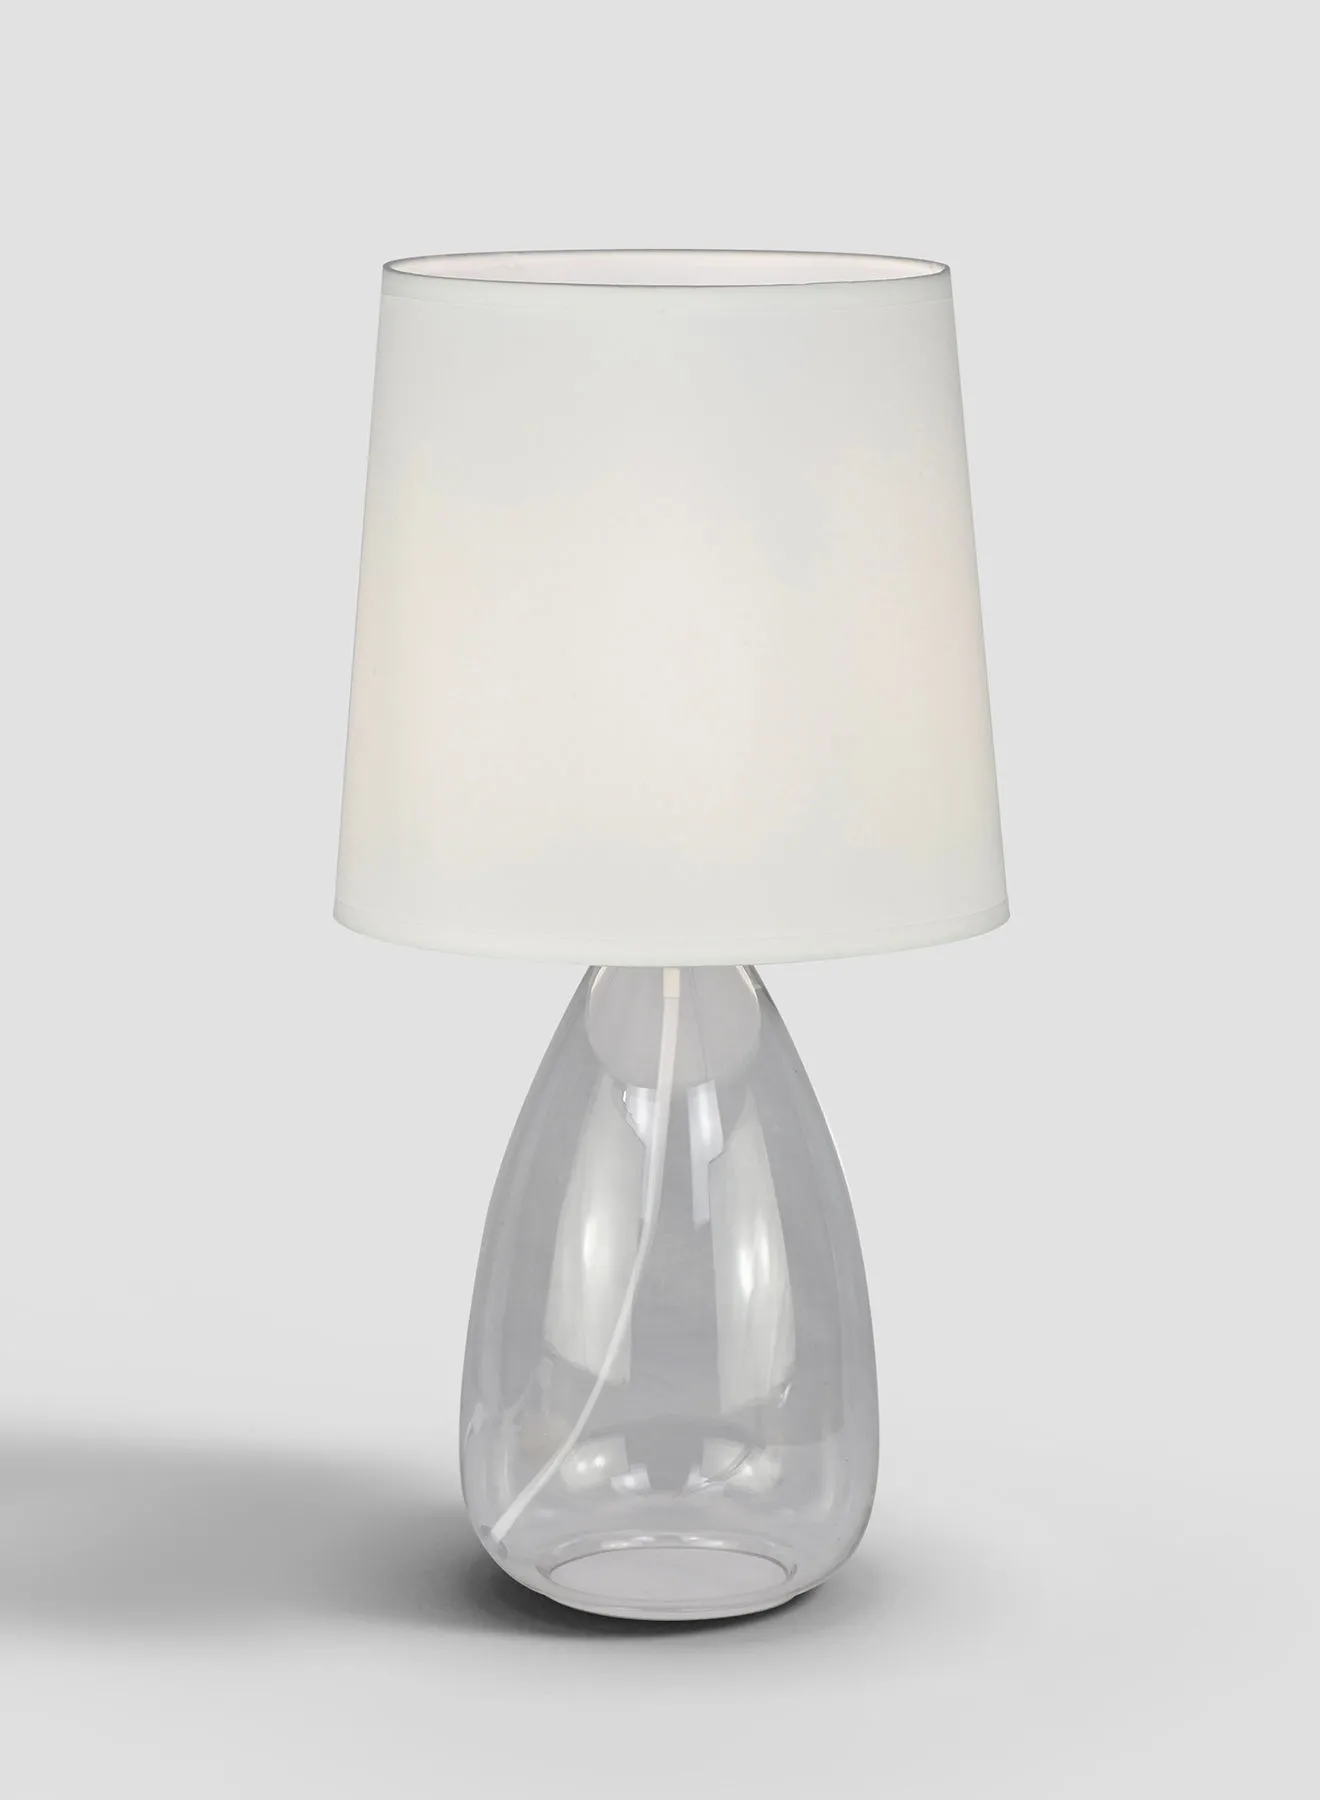 Switch Bouteille Glass Table Lamp مادة فاخرة فريدة من نوعها لمنزل أنيق ومثالي LT4100 شفاف / أوف وايت 23 × 45.5 شفاف / أوف وايت 23 × 45.5 سم